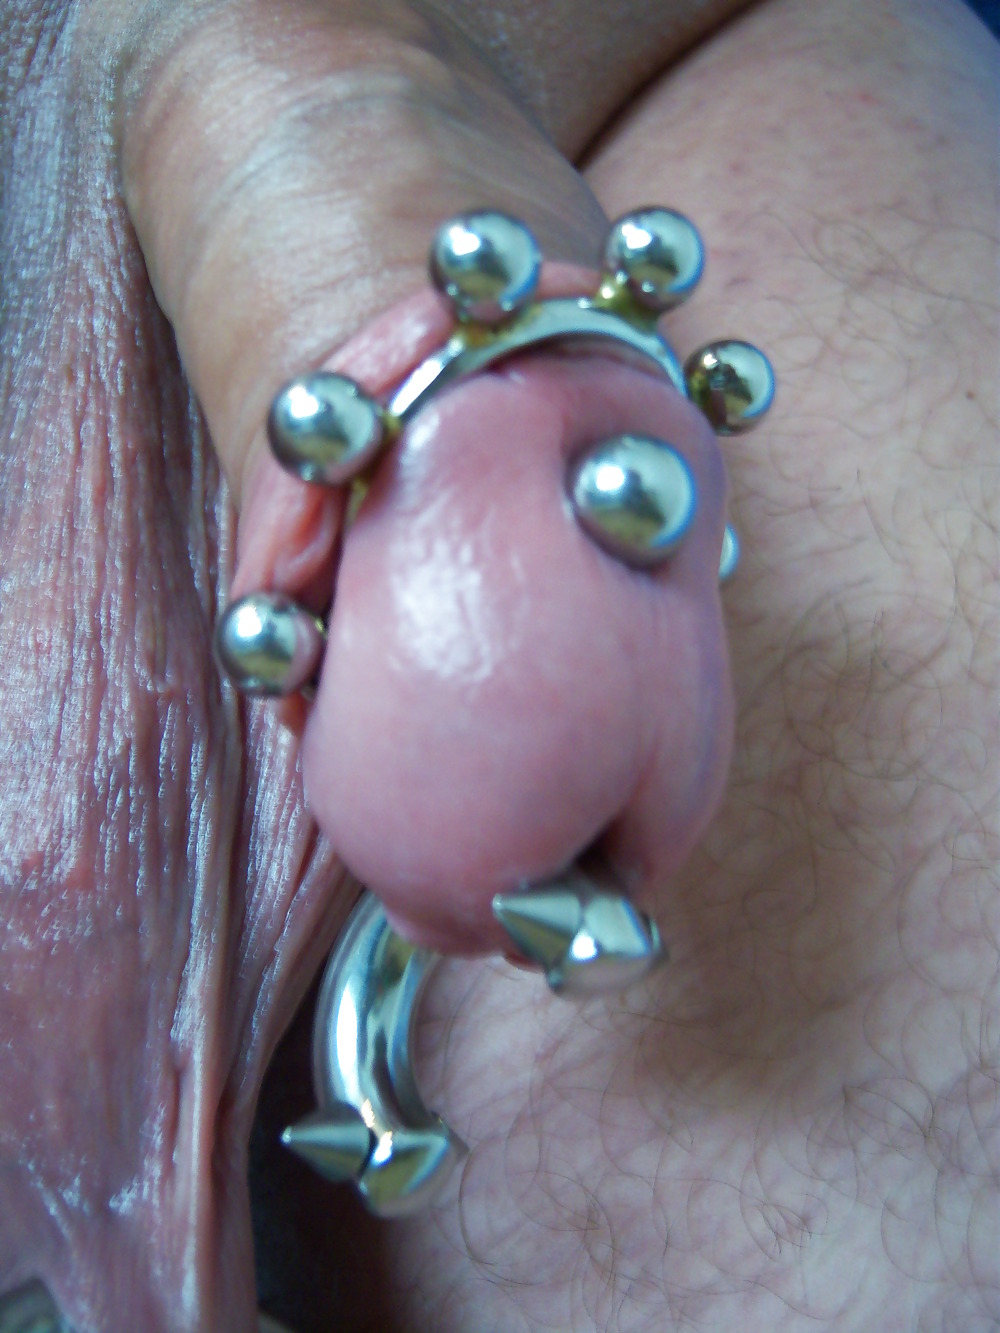 My pierced genitals and nipples. #664143